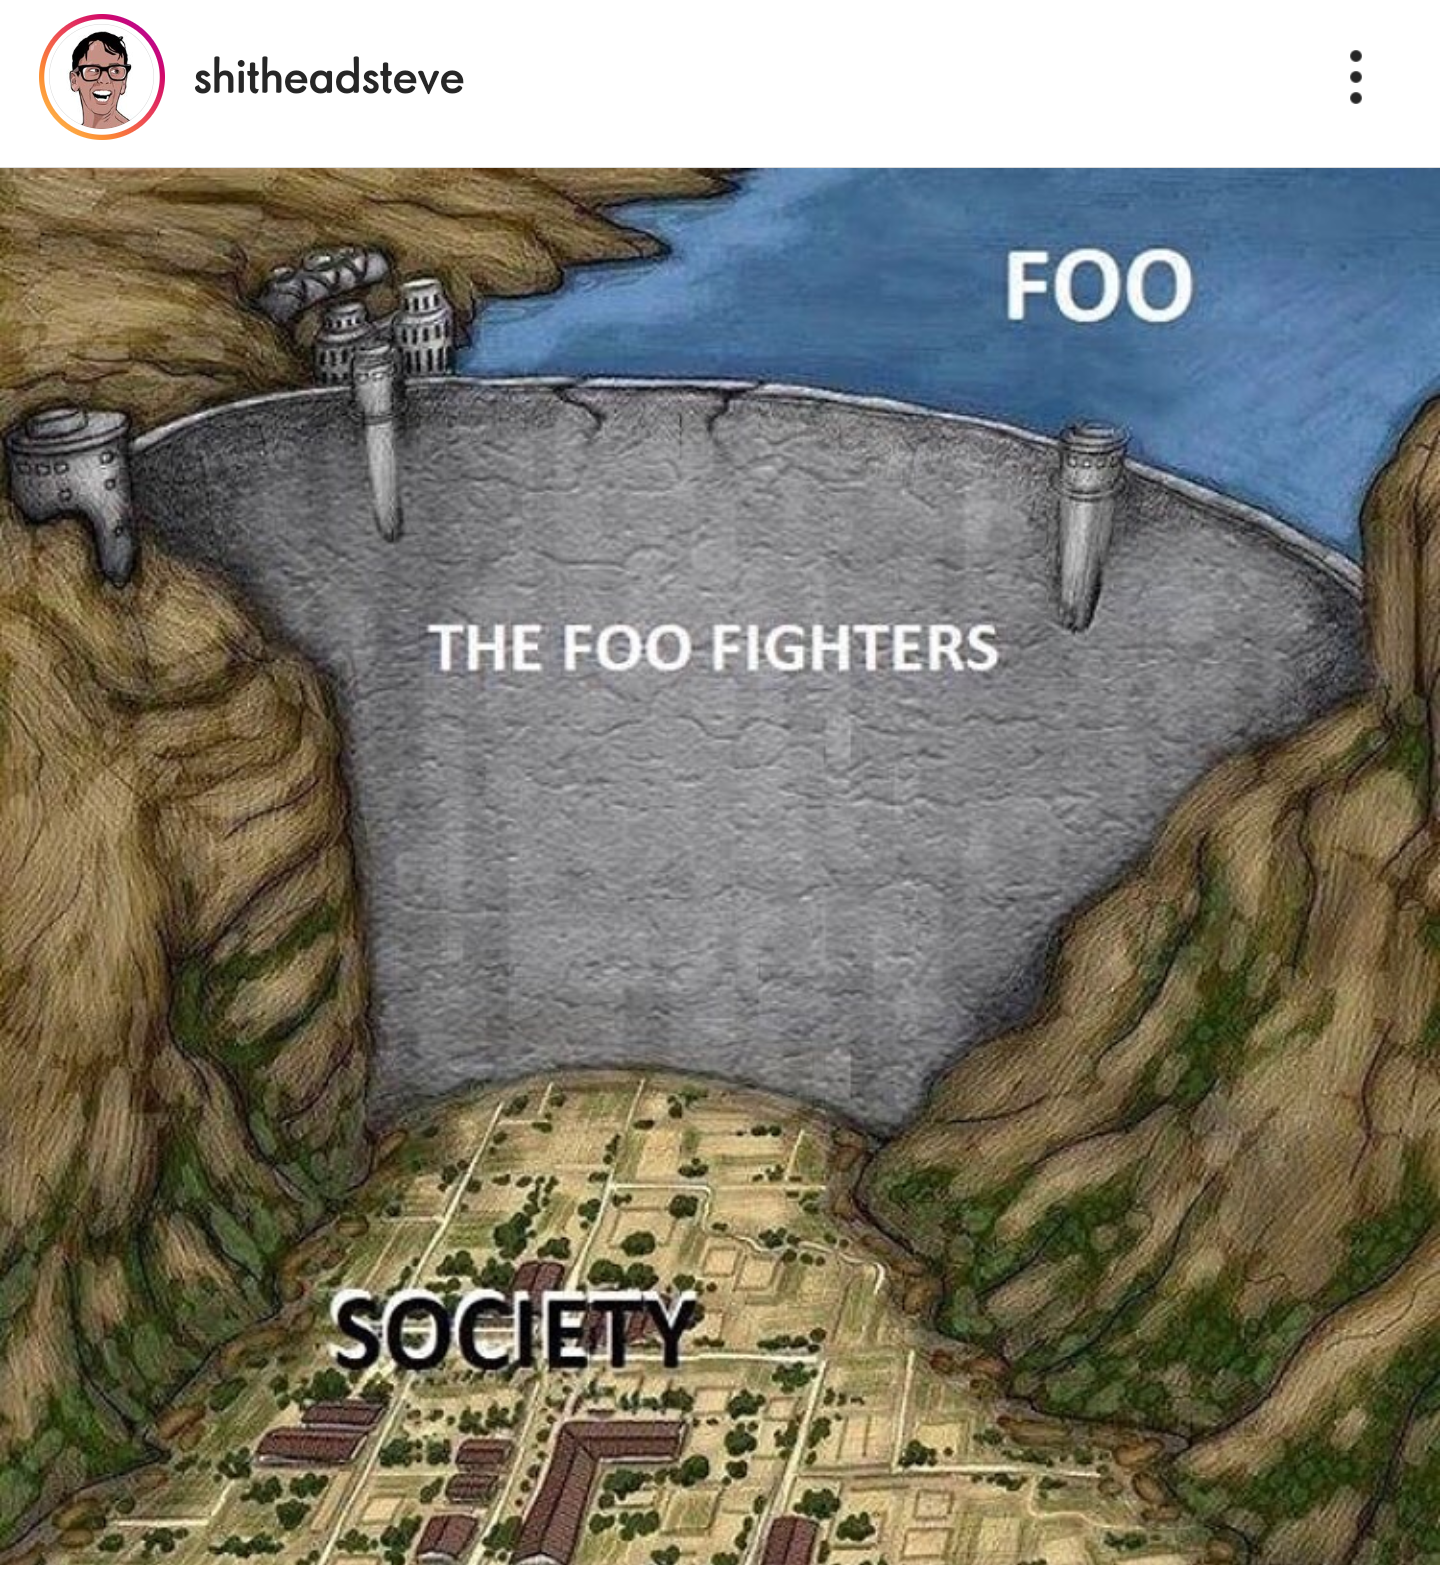 avocado shortage meme - shitheadsteve Foo The Foo Fighters Society